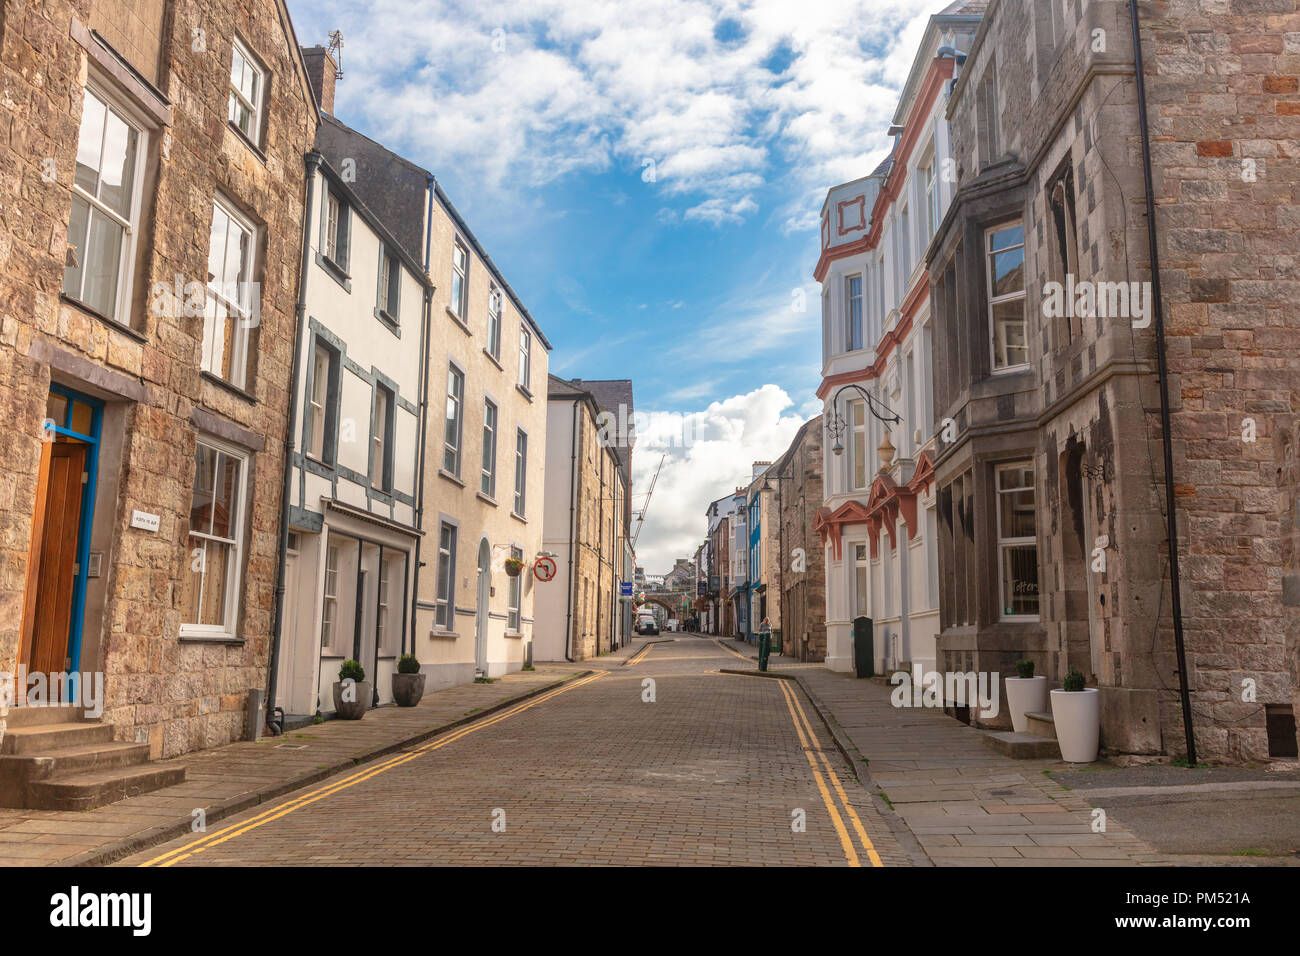 Narrow old street in Caernarfon, Wales with elegant Georgian houses. Stock Photo